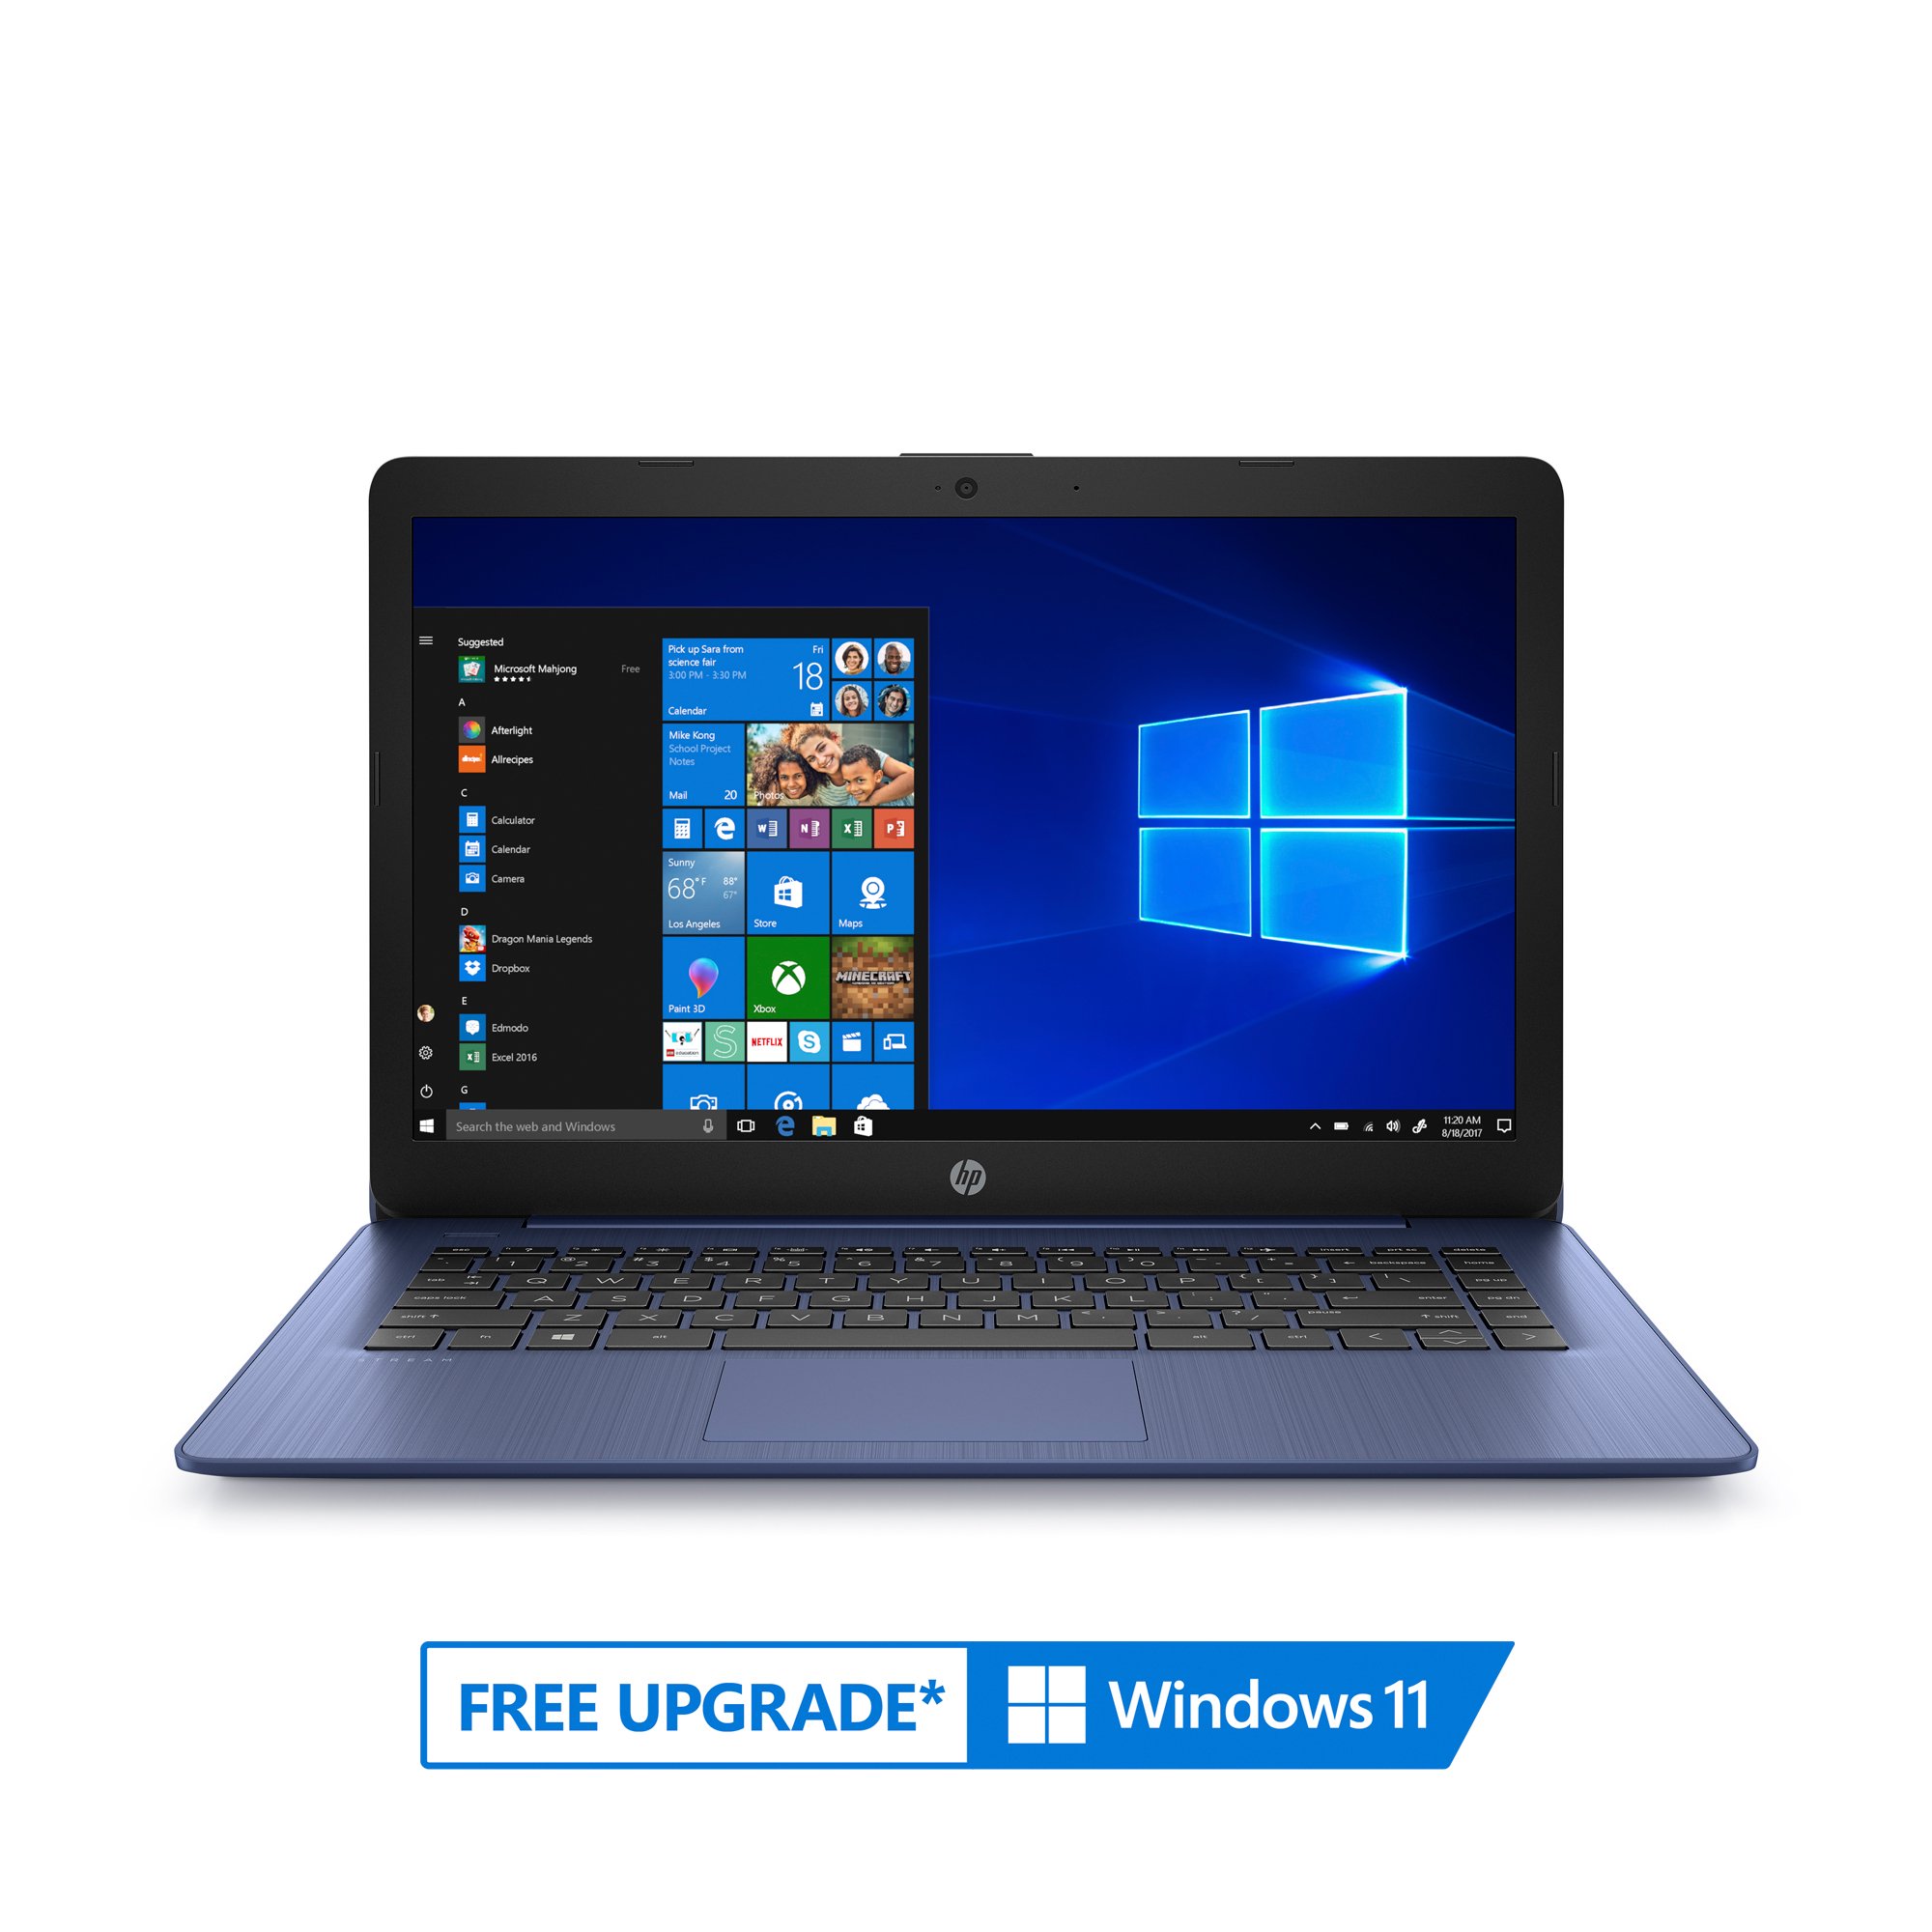 Hp 14 Pc Laptop Intel Celeron N4000 4gb Ram 64gb Hd Windows 10s With 1 Year Office 365 Blue 5605